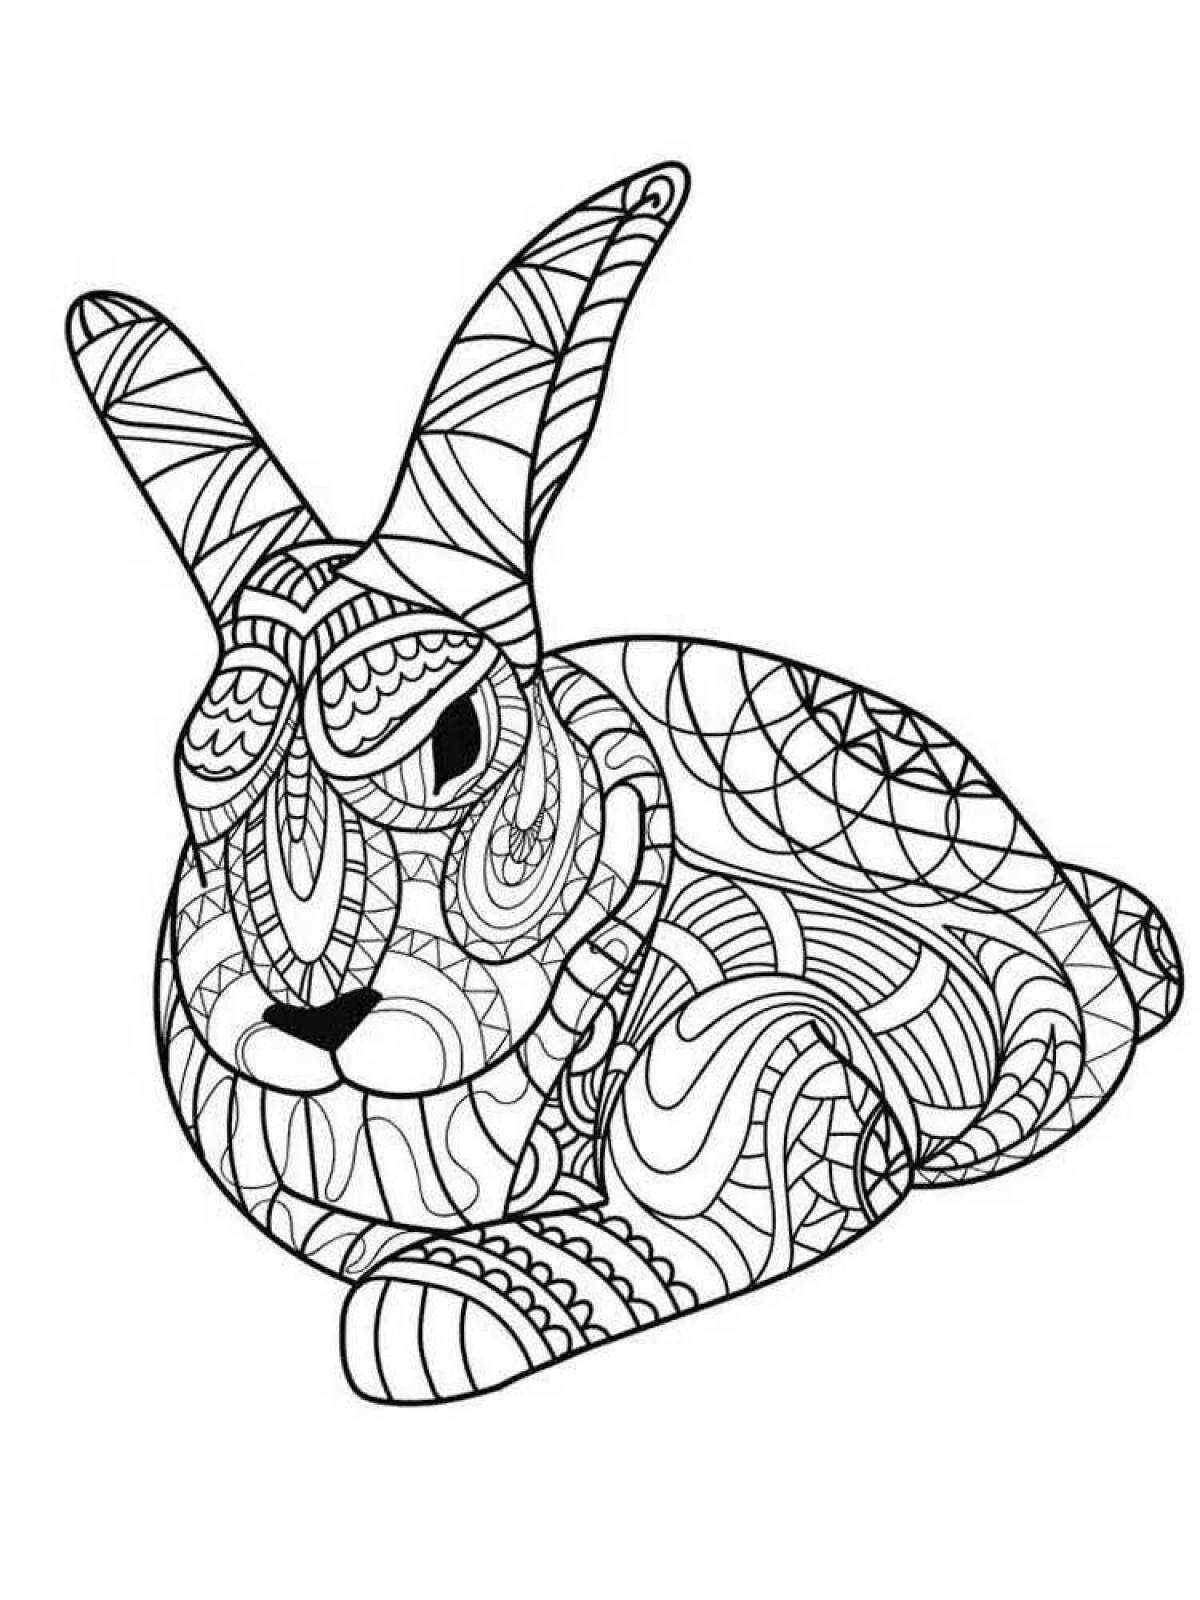 Adorable anti-stress rabbit coloring book